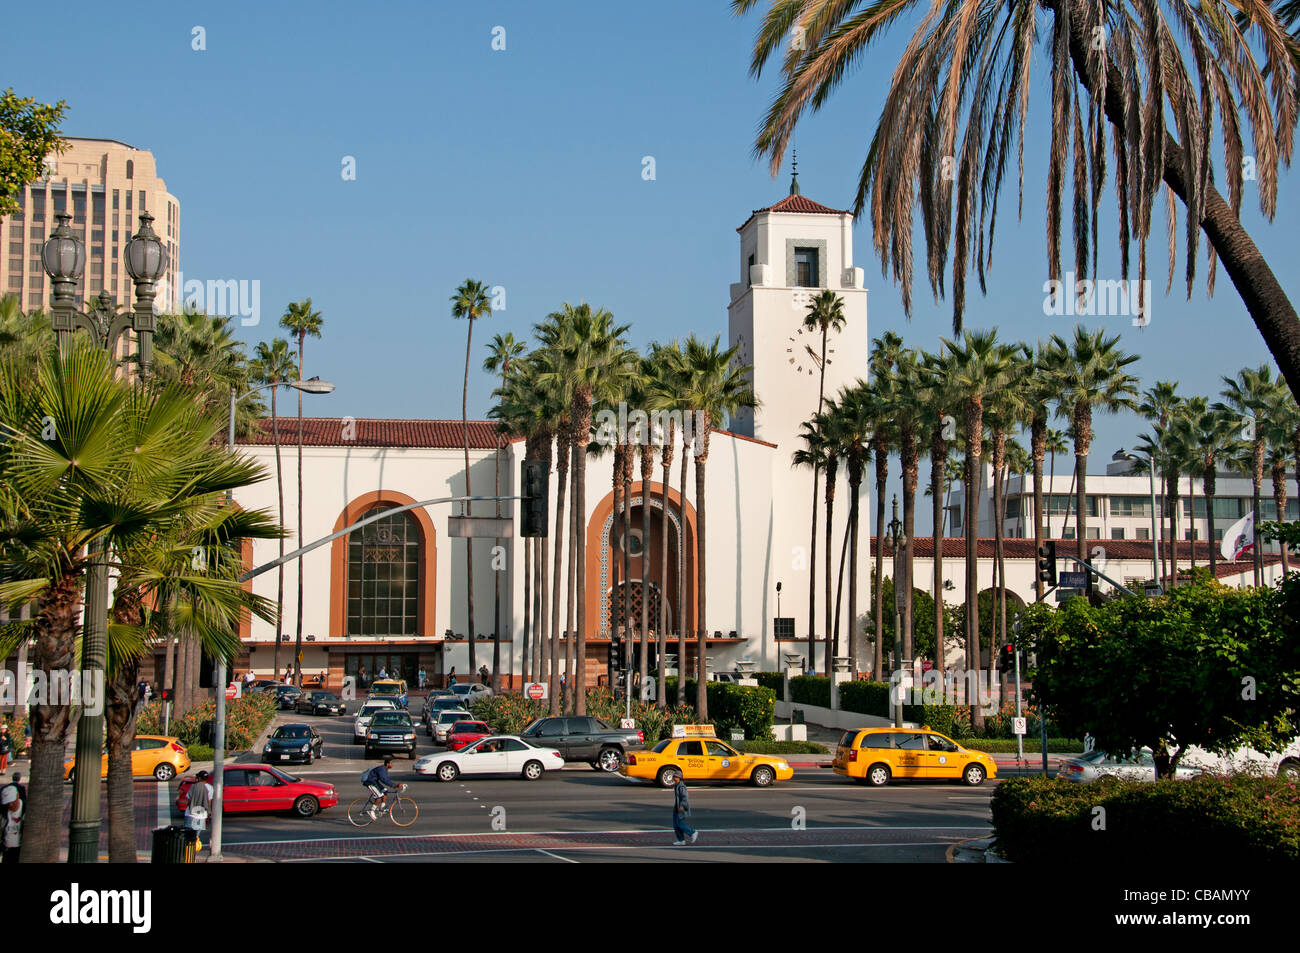 La gare Union au centre-ville El Pueblo espagnol Espagne Los Angeles California United States Banque D'Images